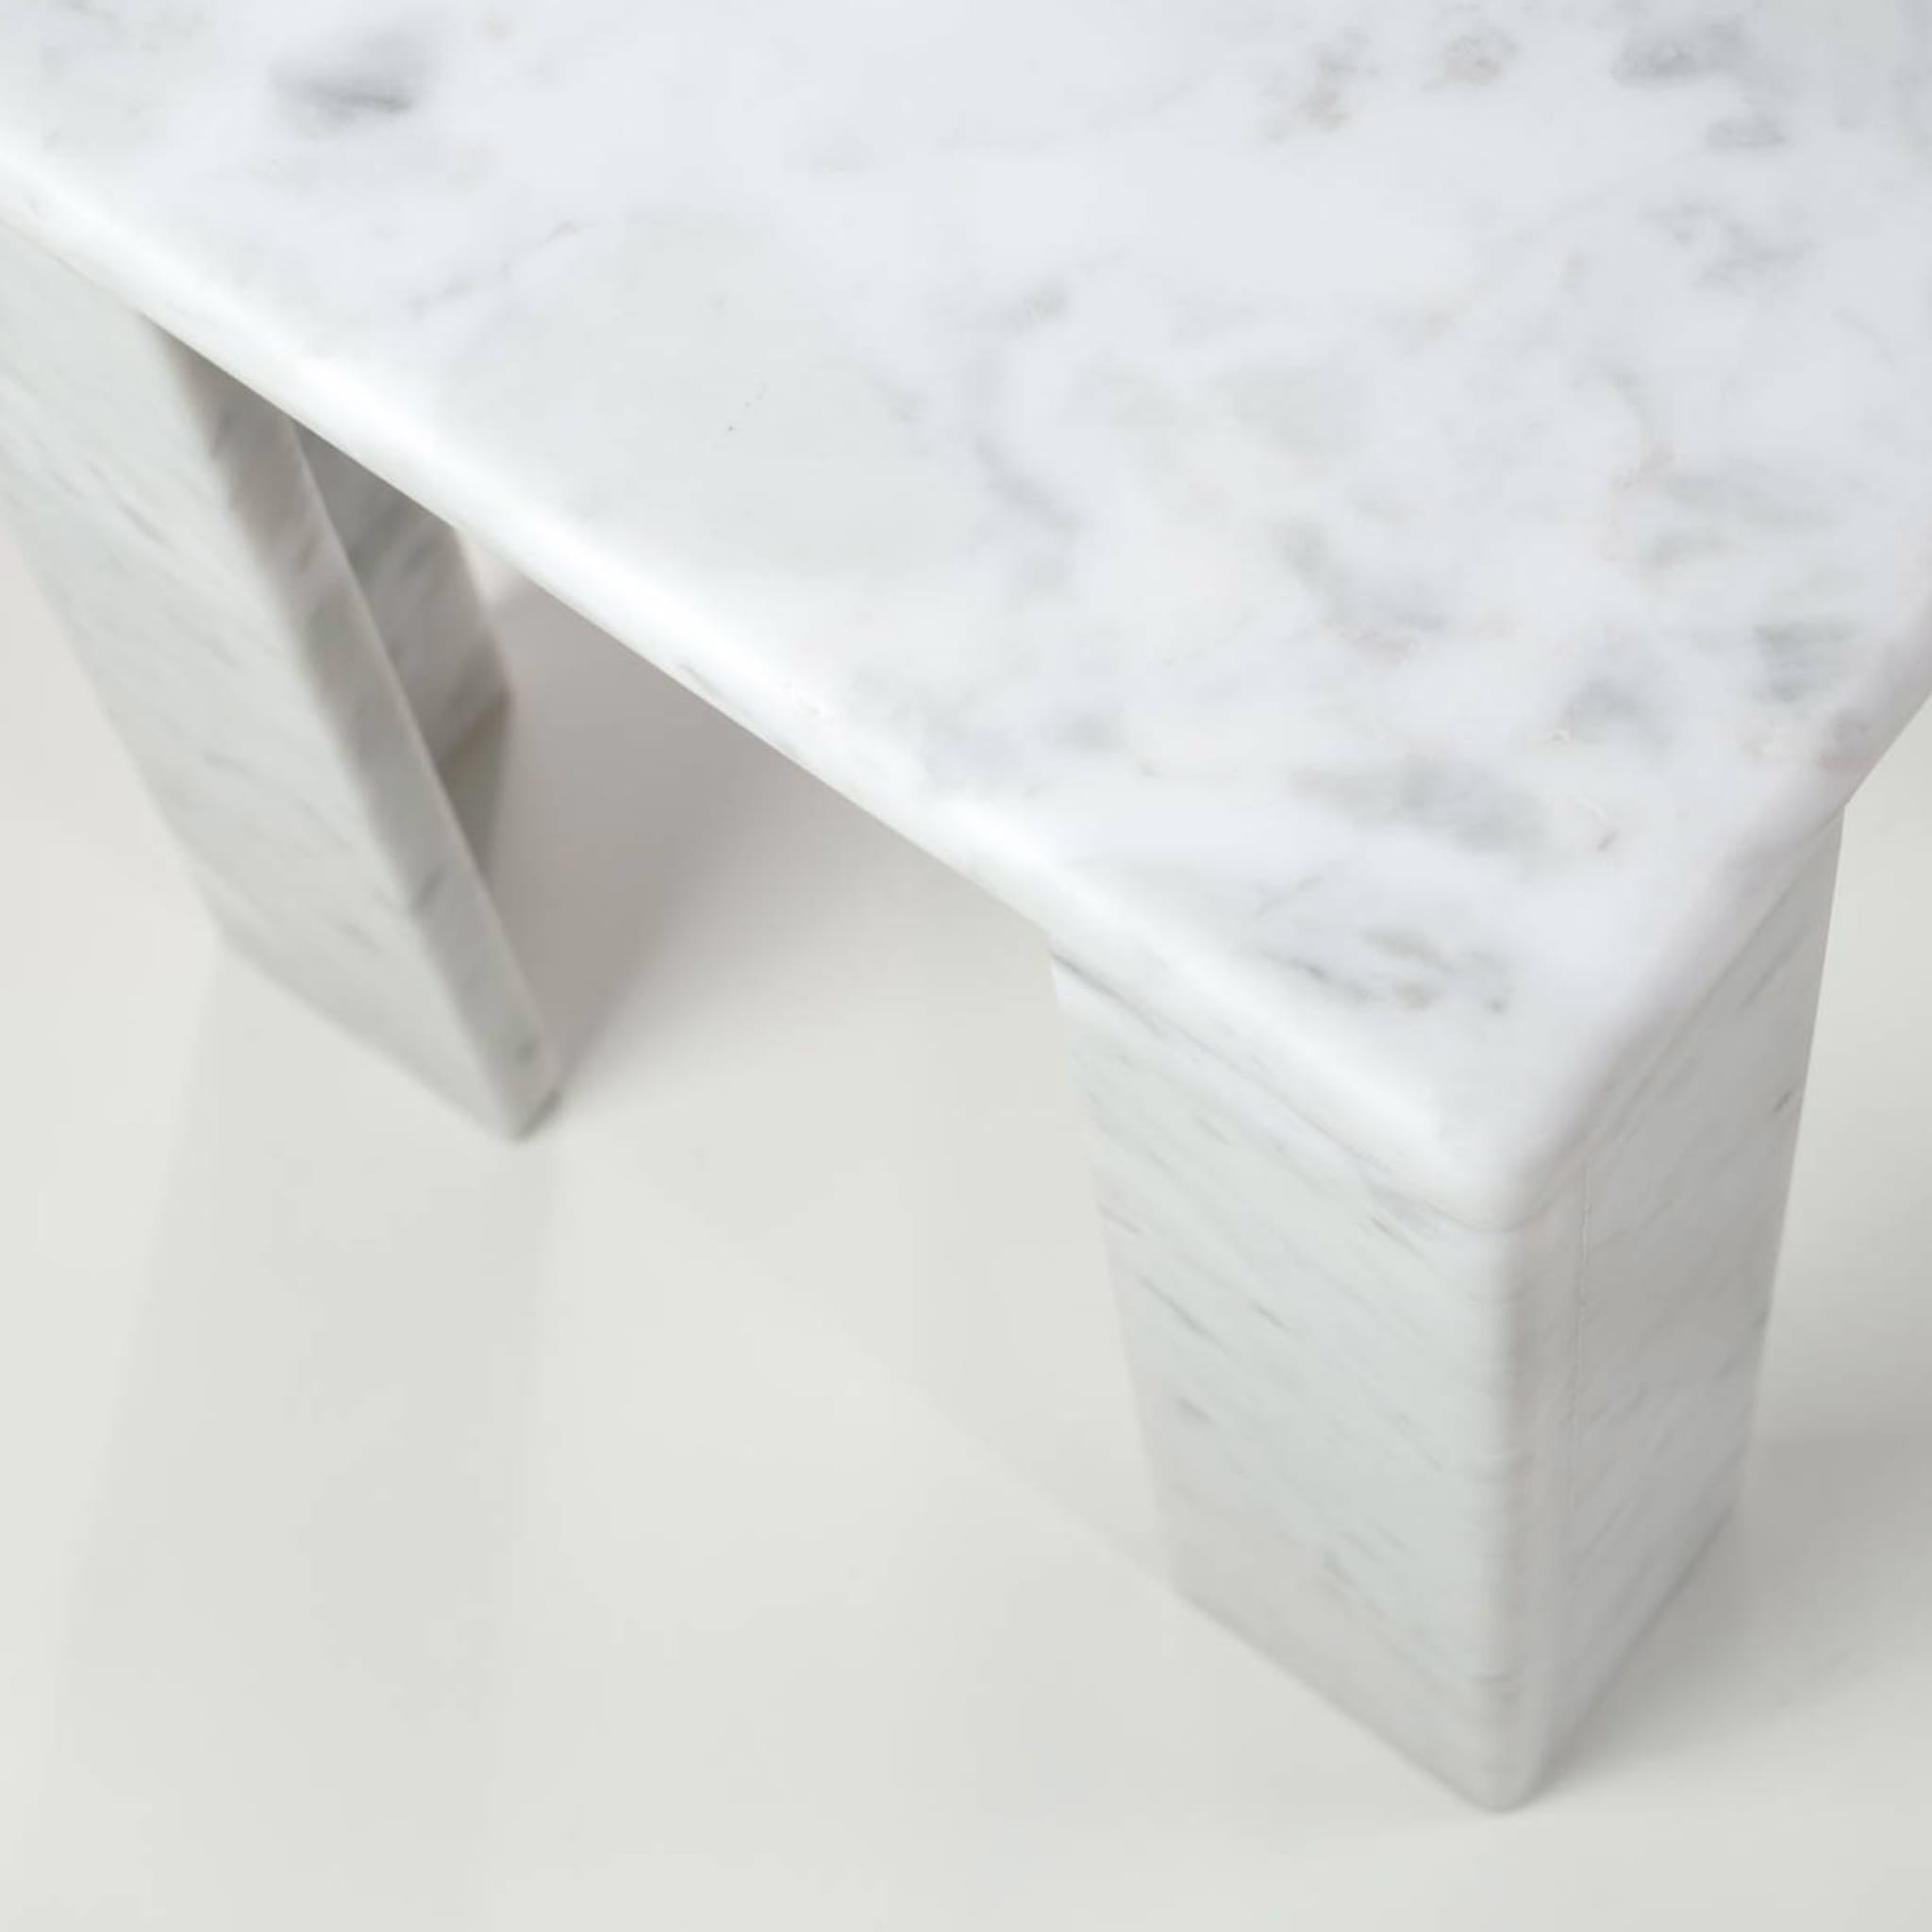 ChunkY02 Carrara Marble Side Table - Alternative view 3